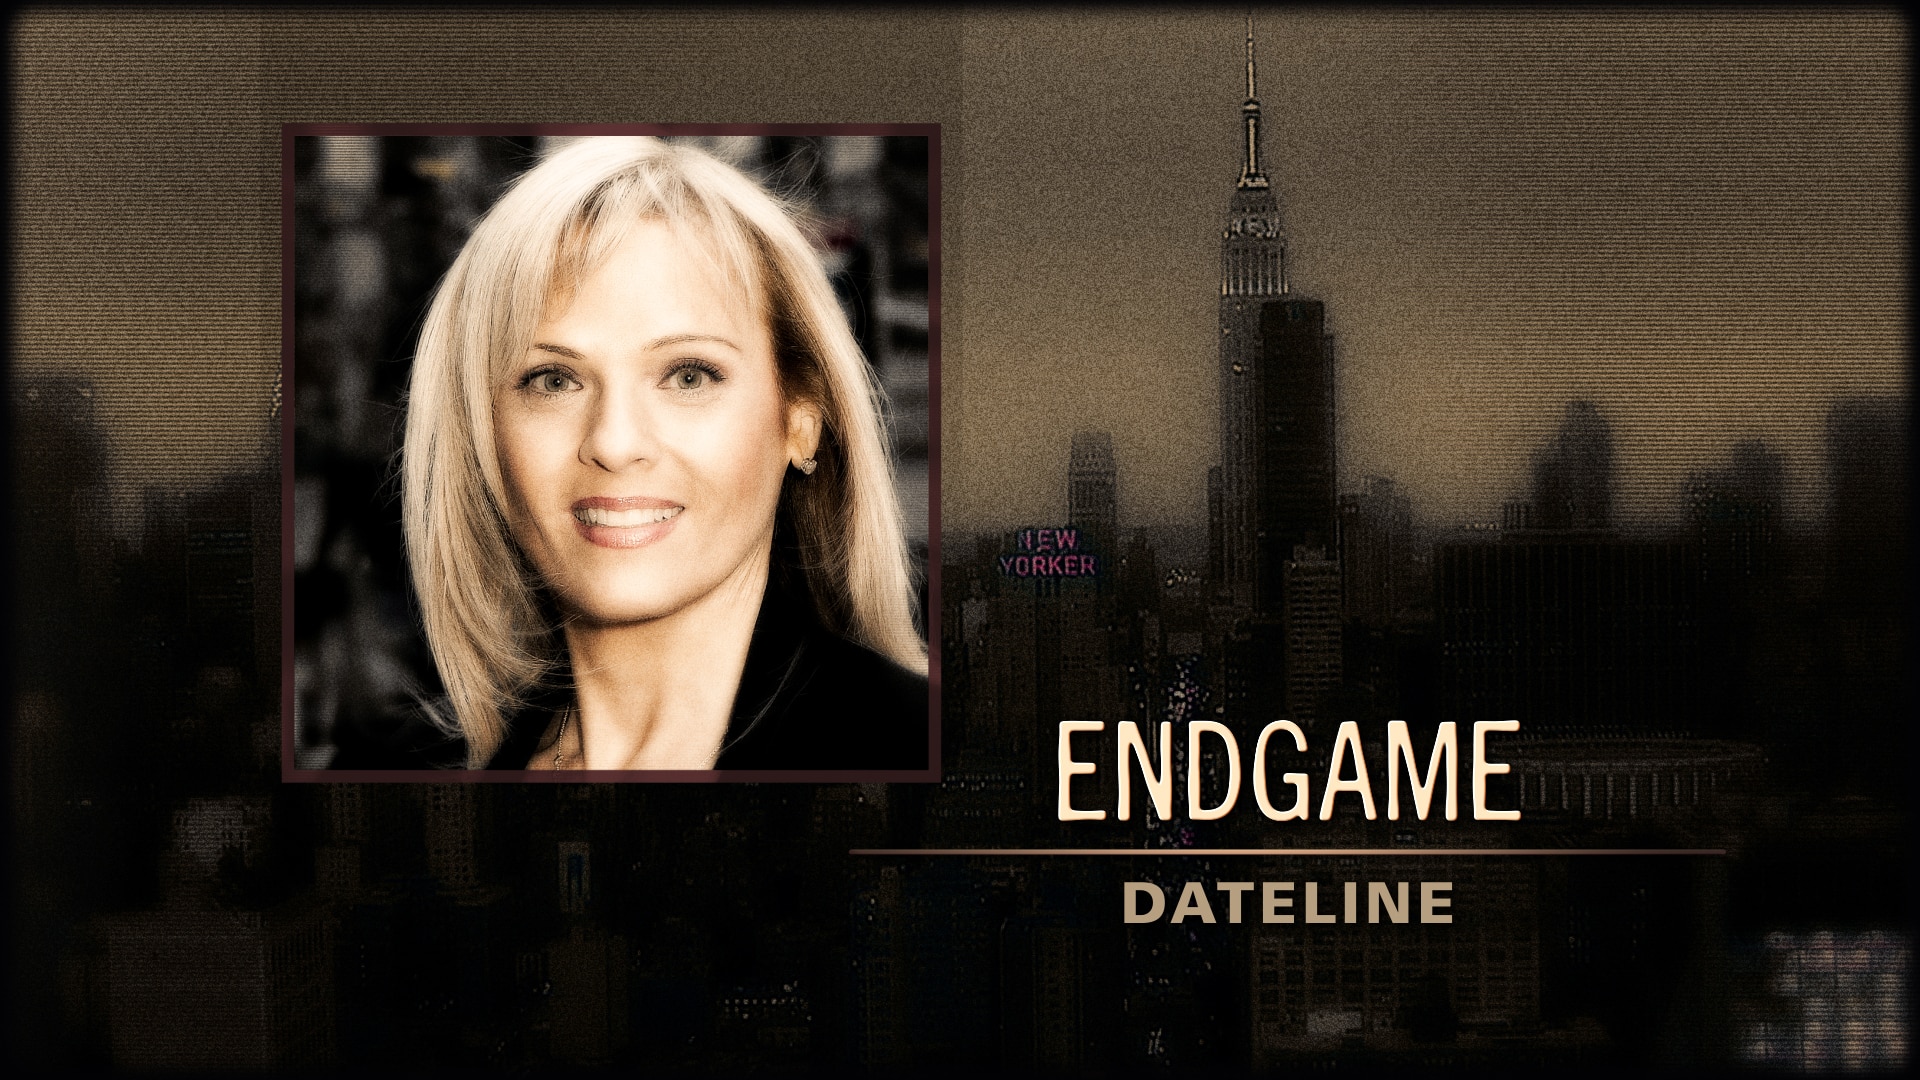 Watch Dateline Episode: Endgame - NBC.com